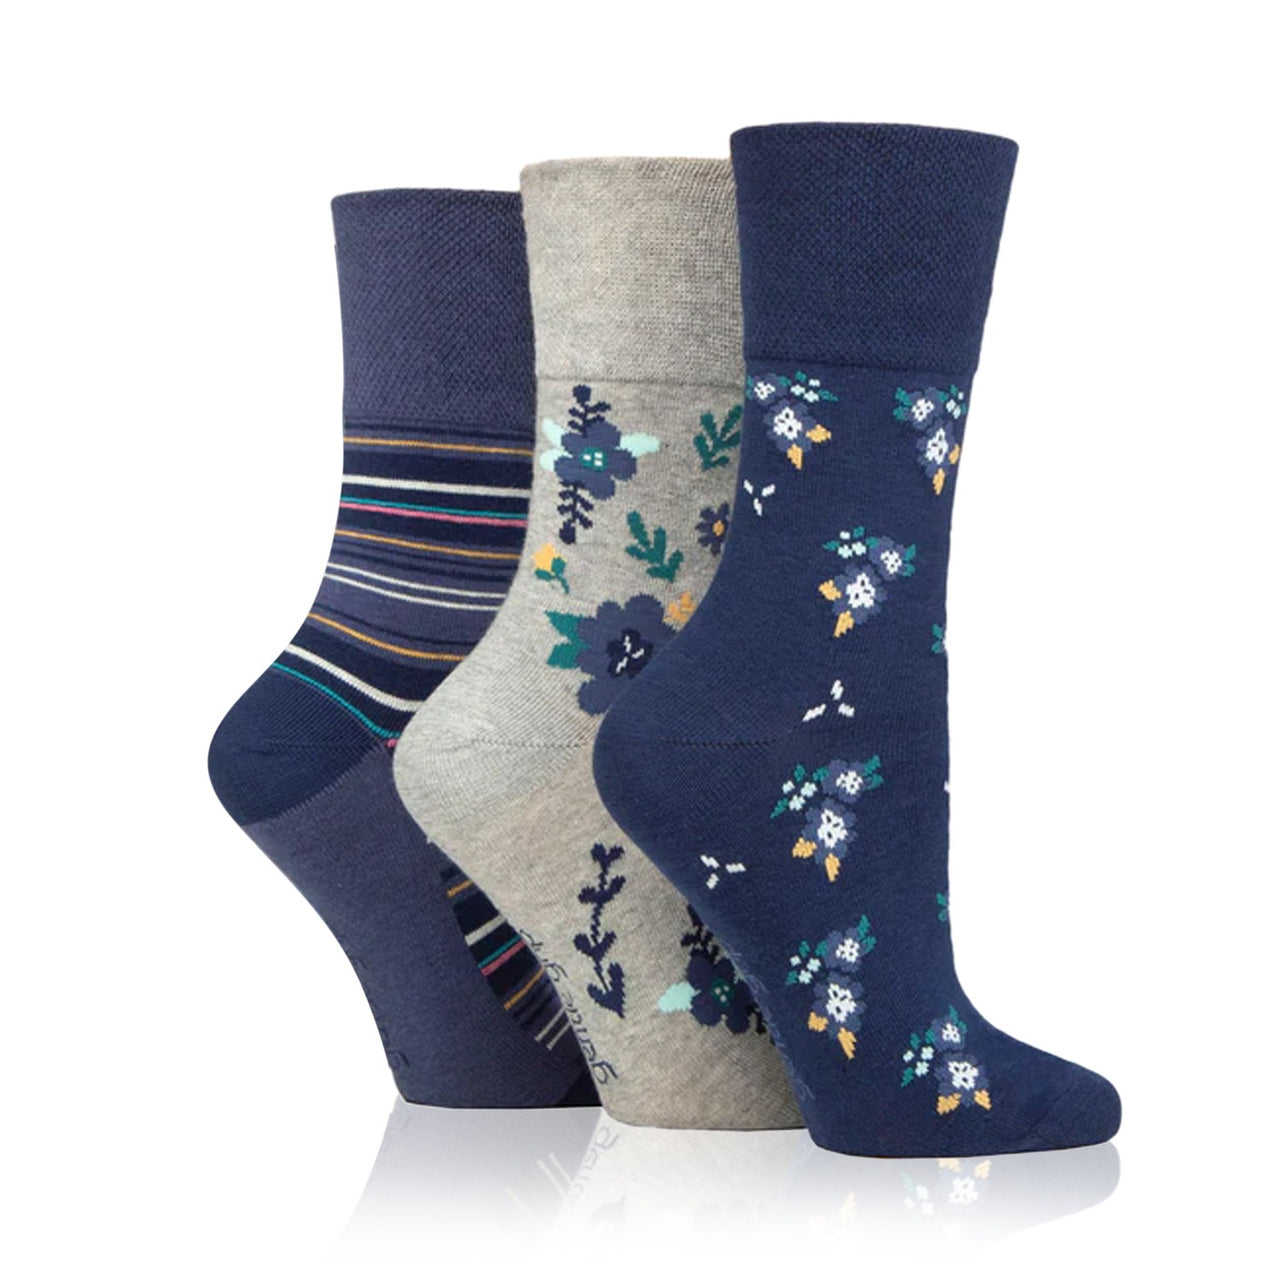 floral non binding socks in navy blue